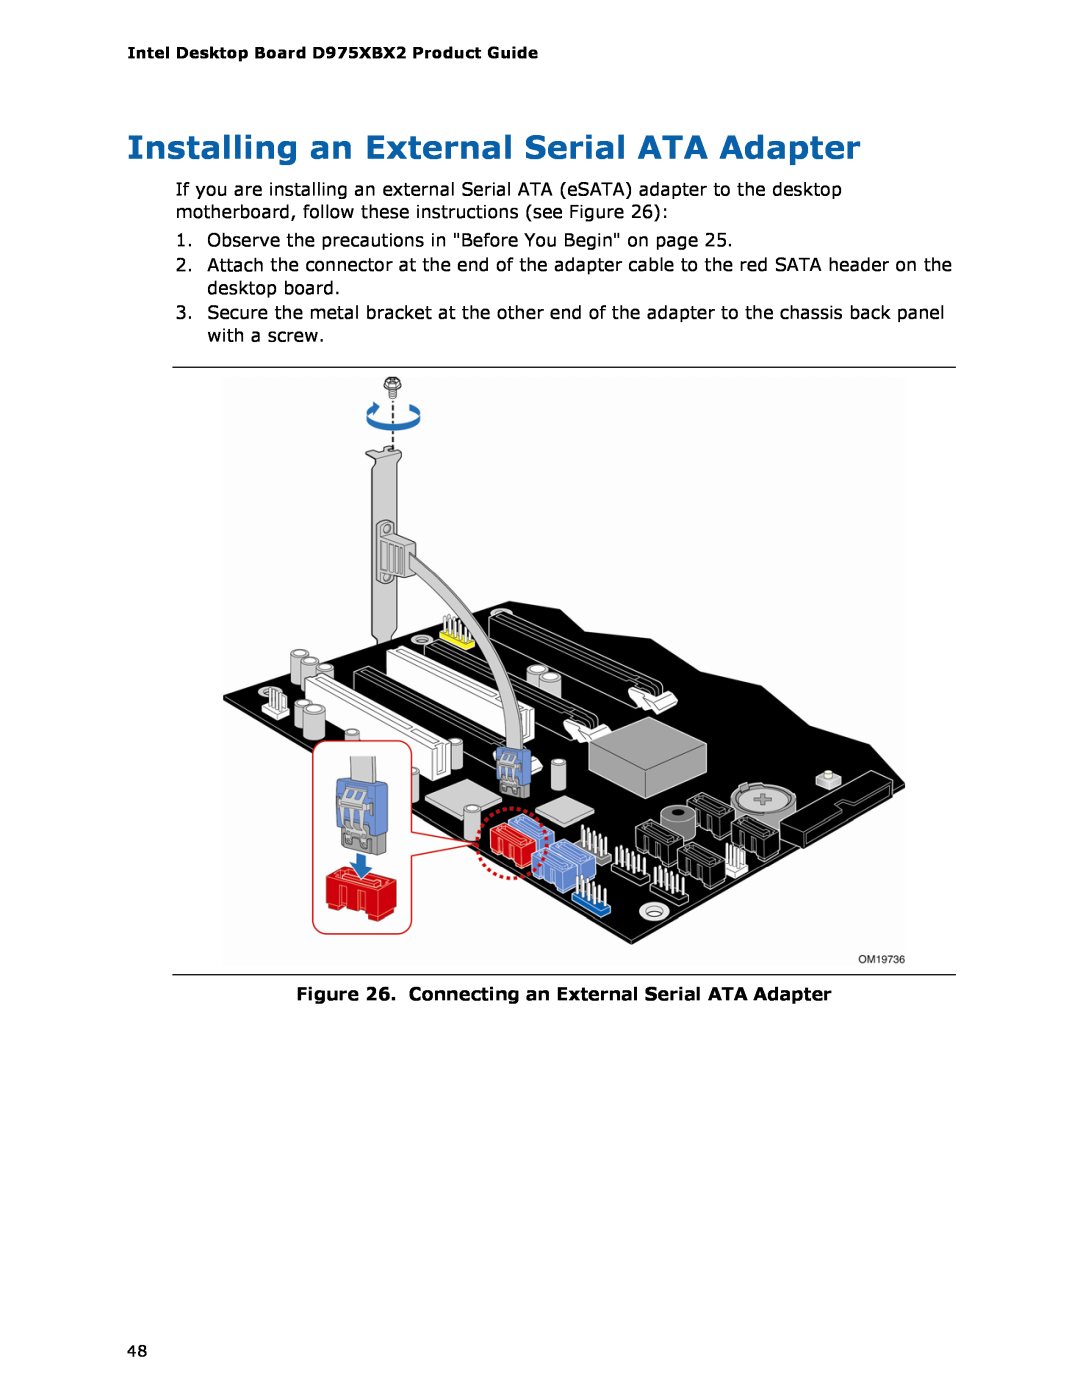 Intel D975XBX2 manual Installing an External Serial ATA Adapter 